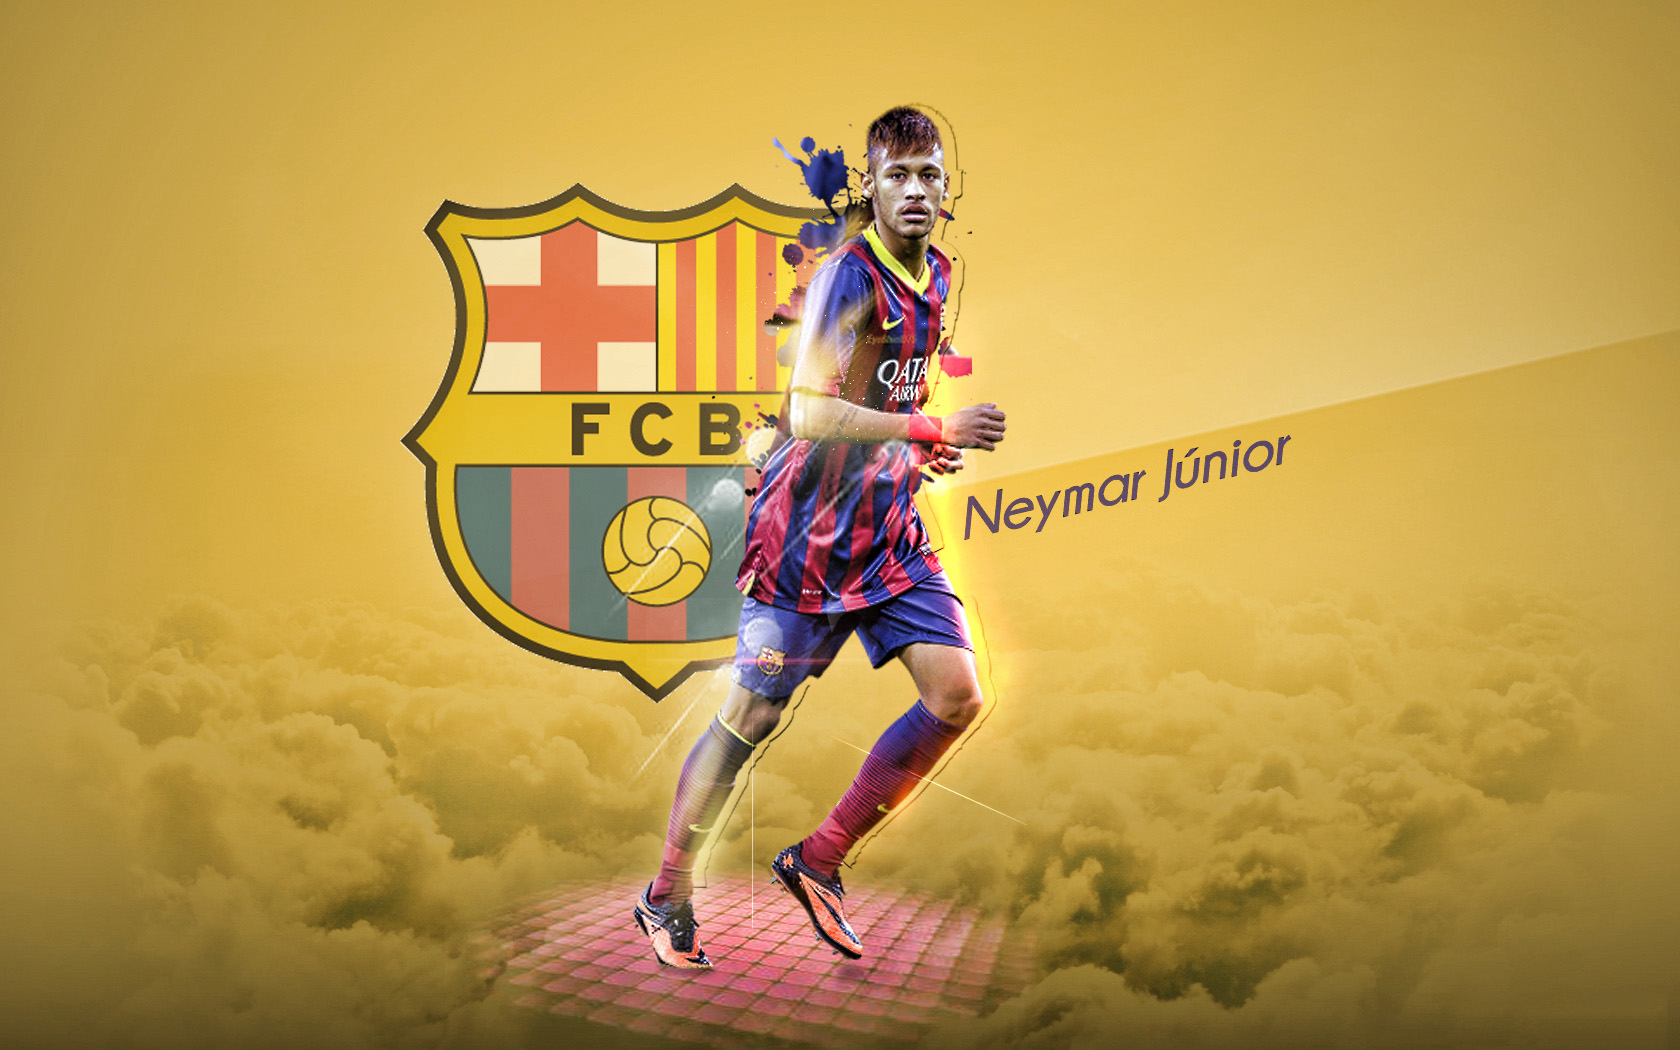 Neymar Wallpaper In Barcelona And Brazil